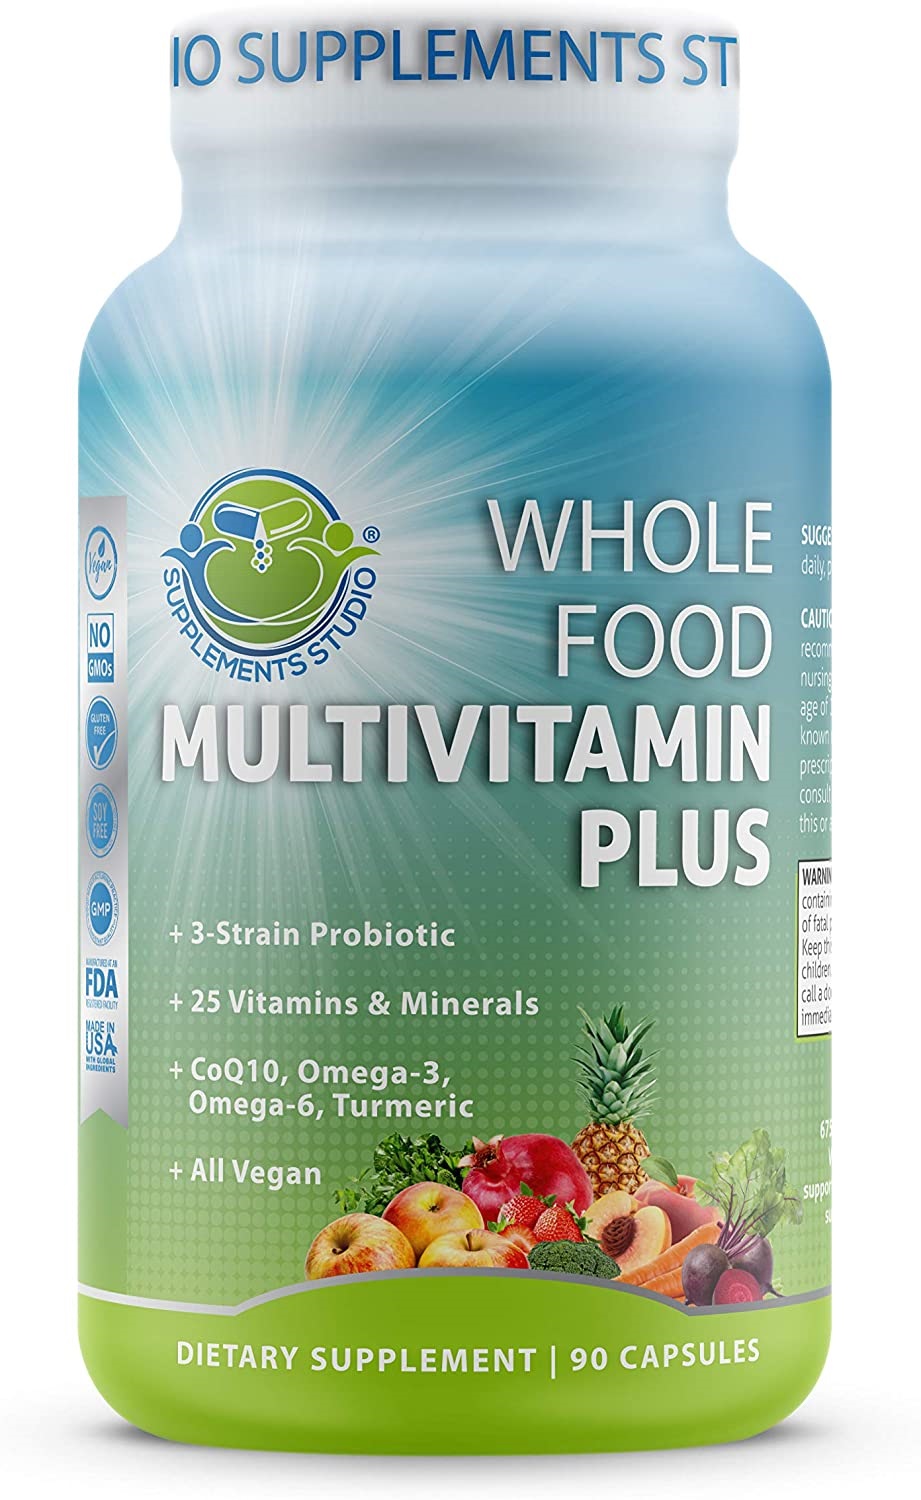 Whole Food Multivitamin Plus - Vegan - Daily Multivitamin for Men and Women